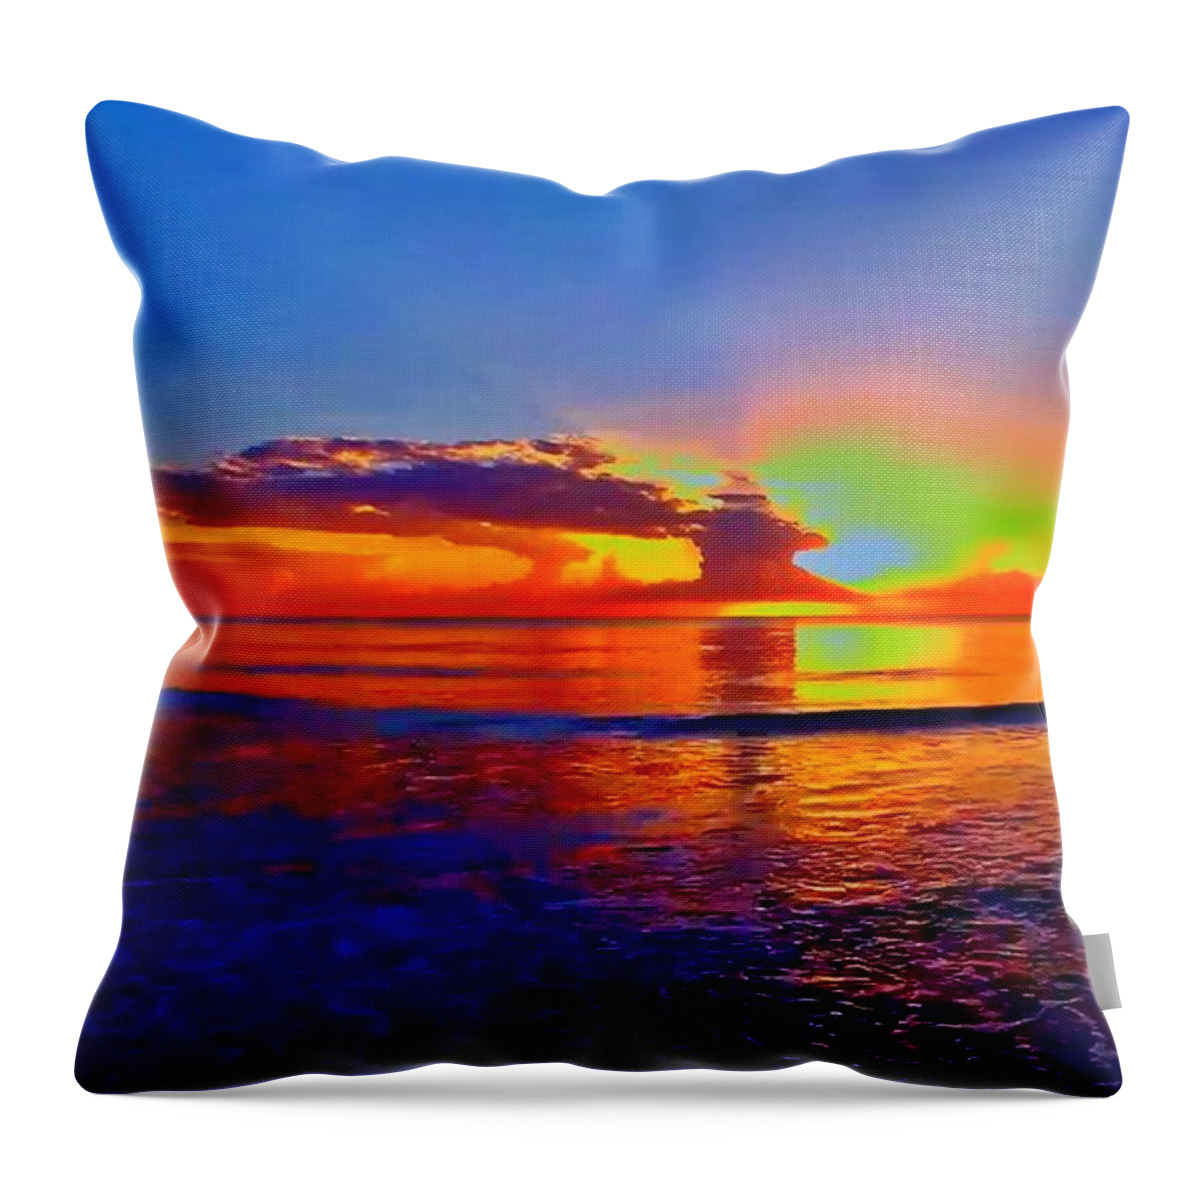 Sunrise Throw Pillow featuring the photograph Sunrise Beach 666 by Rip Read